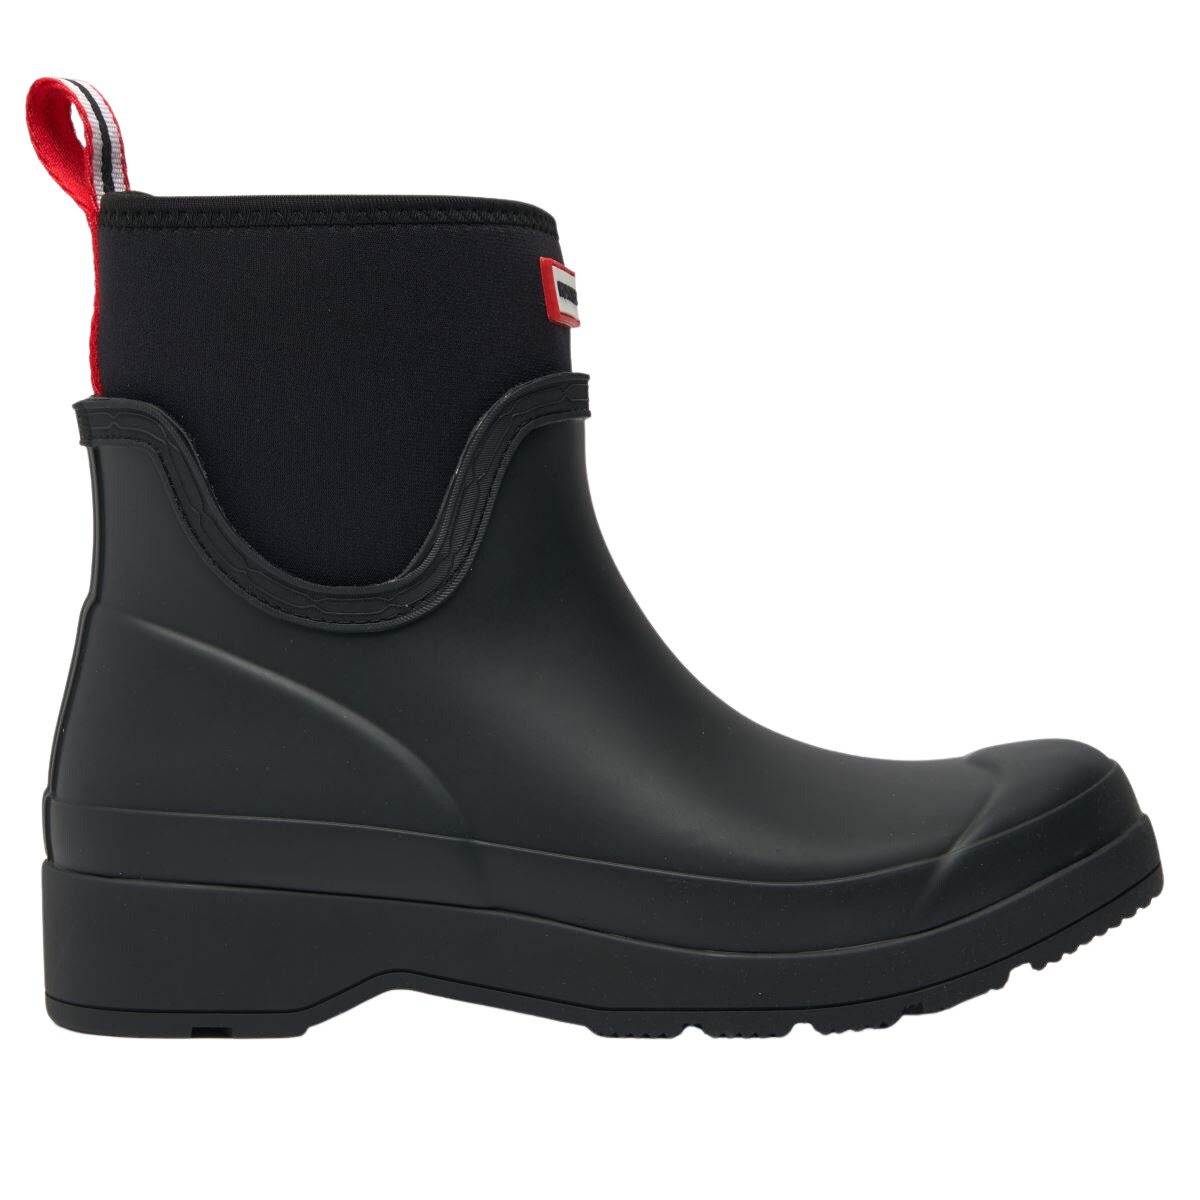 Play Neoprene Boots in Black, €105.95